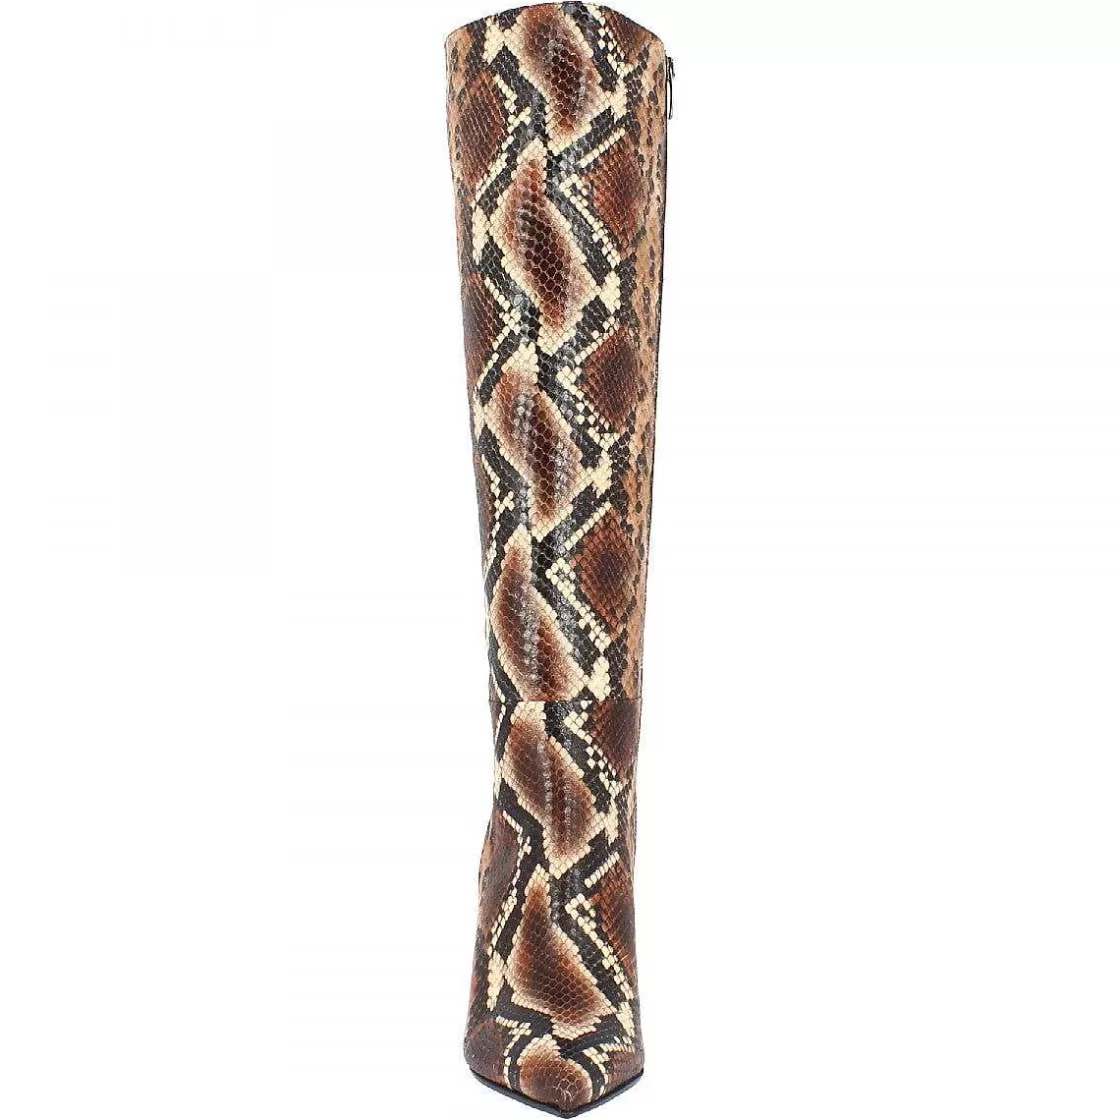 Leonardo Women'S Handmade Pointed Toe Heeled Knee High Boots In Dark Brown Python Print Leather With Zipper Online